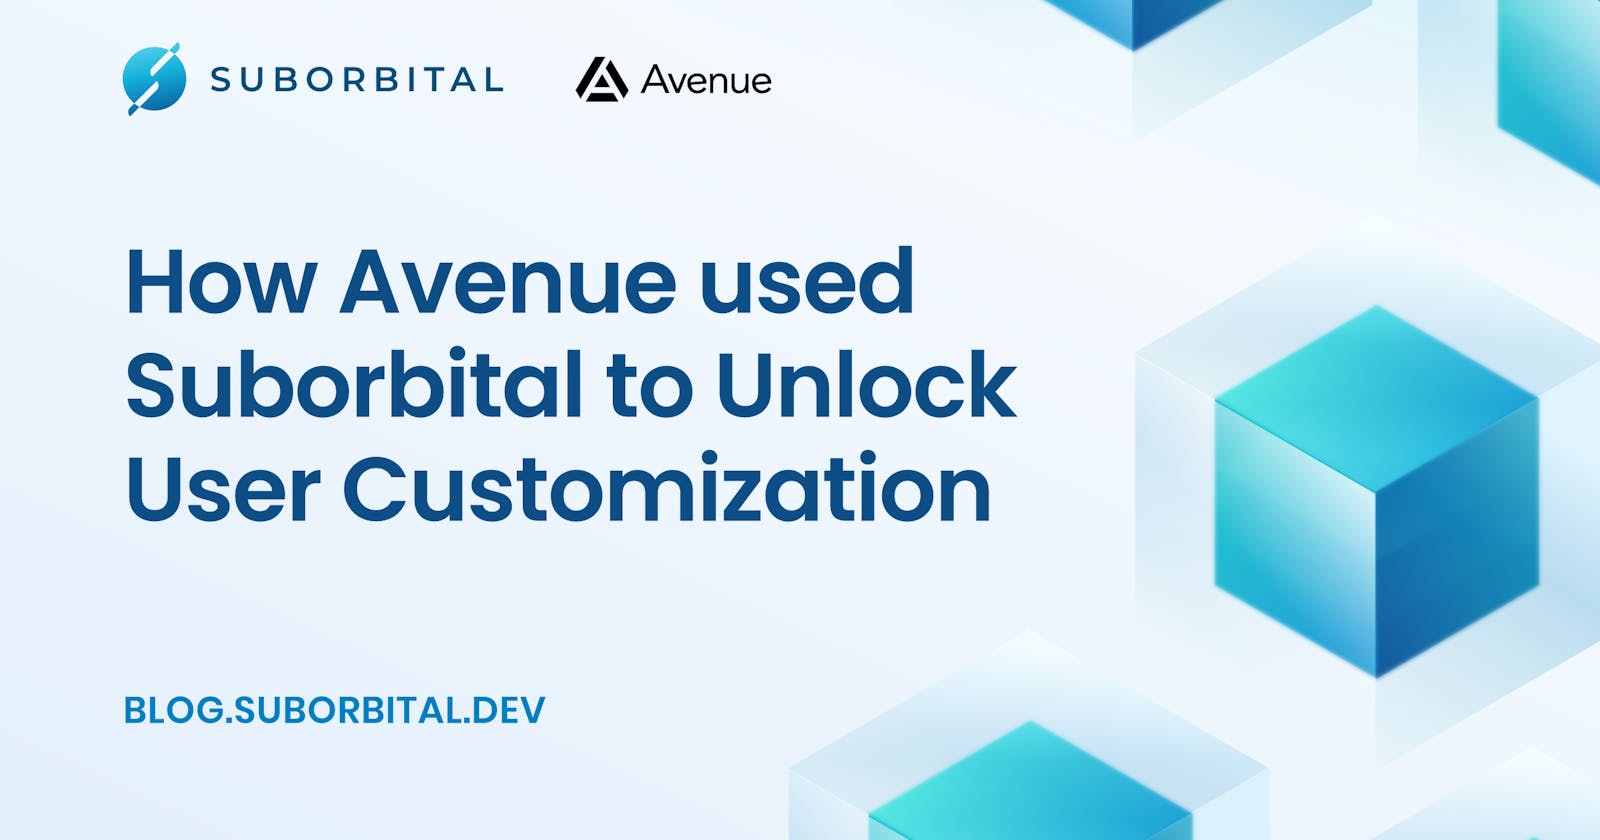 Case Study: How Avenue used Suborbital to Unlock User Customization